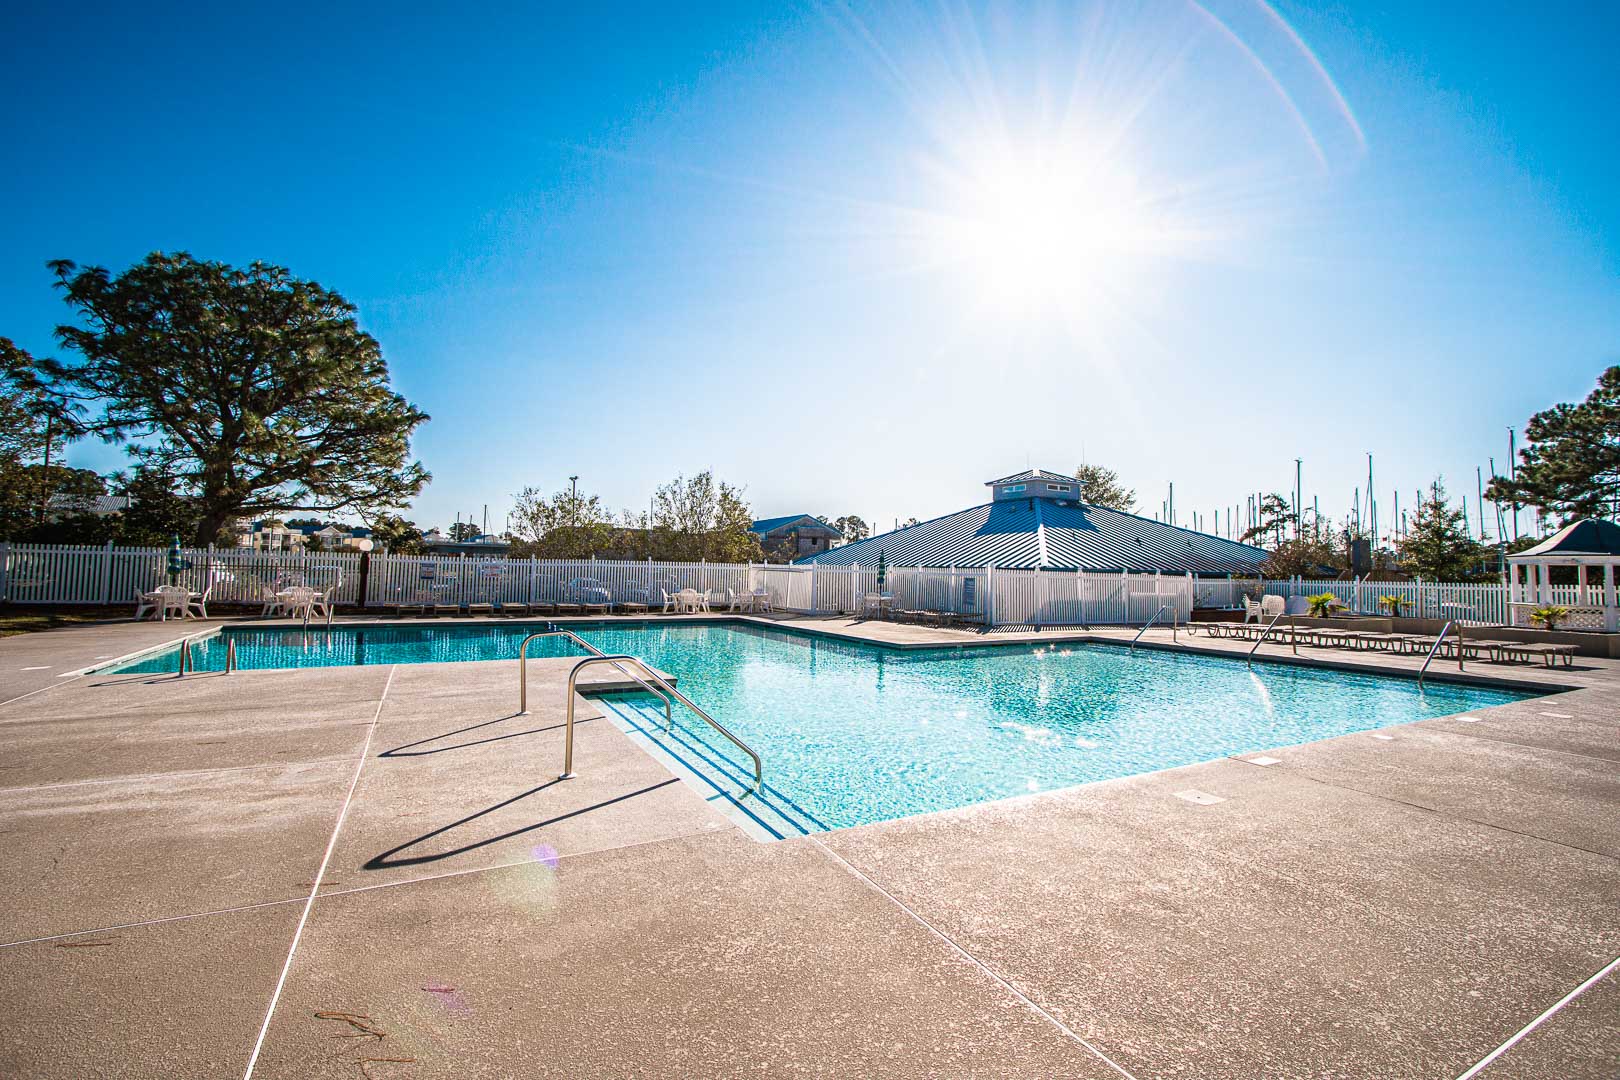 A crisp outdoor swimming pool at VRI's Waterwood Townhomes in New Bern, North Carolina.